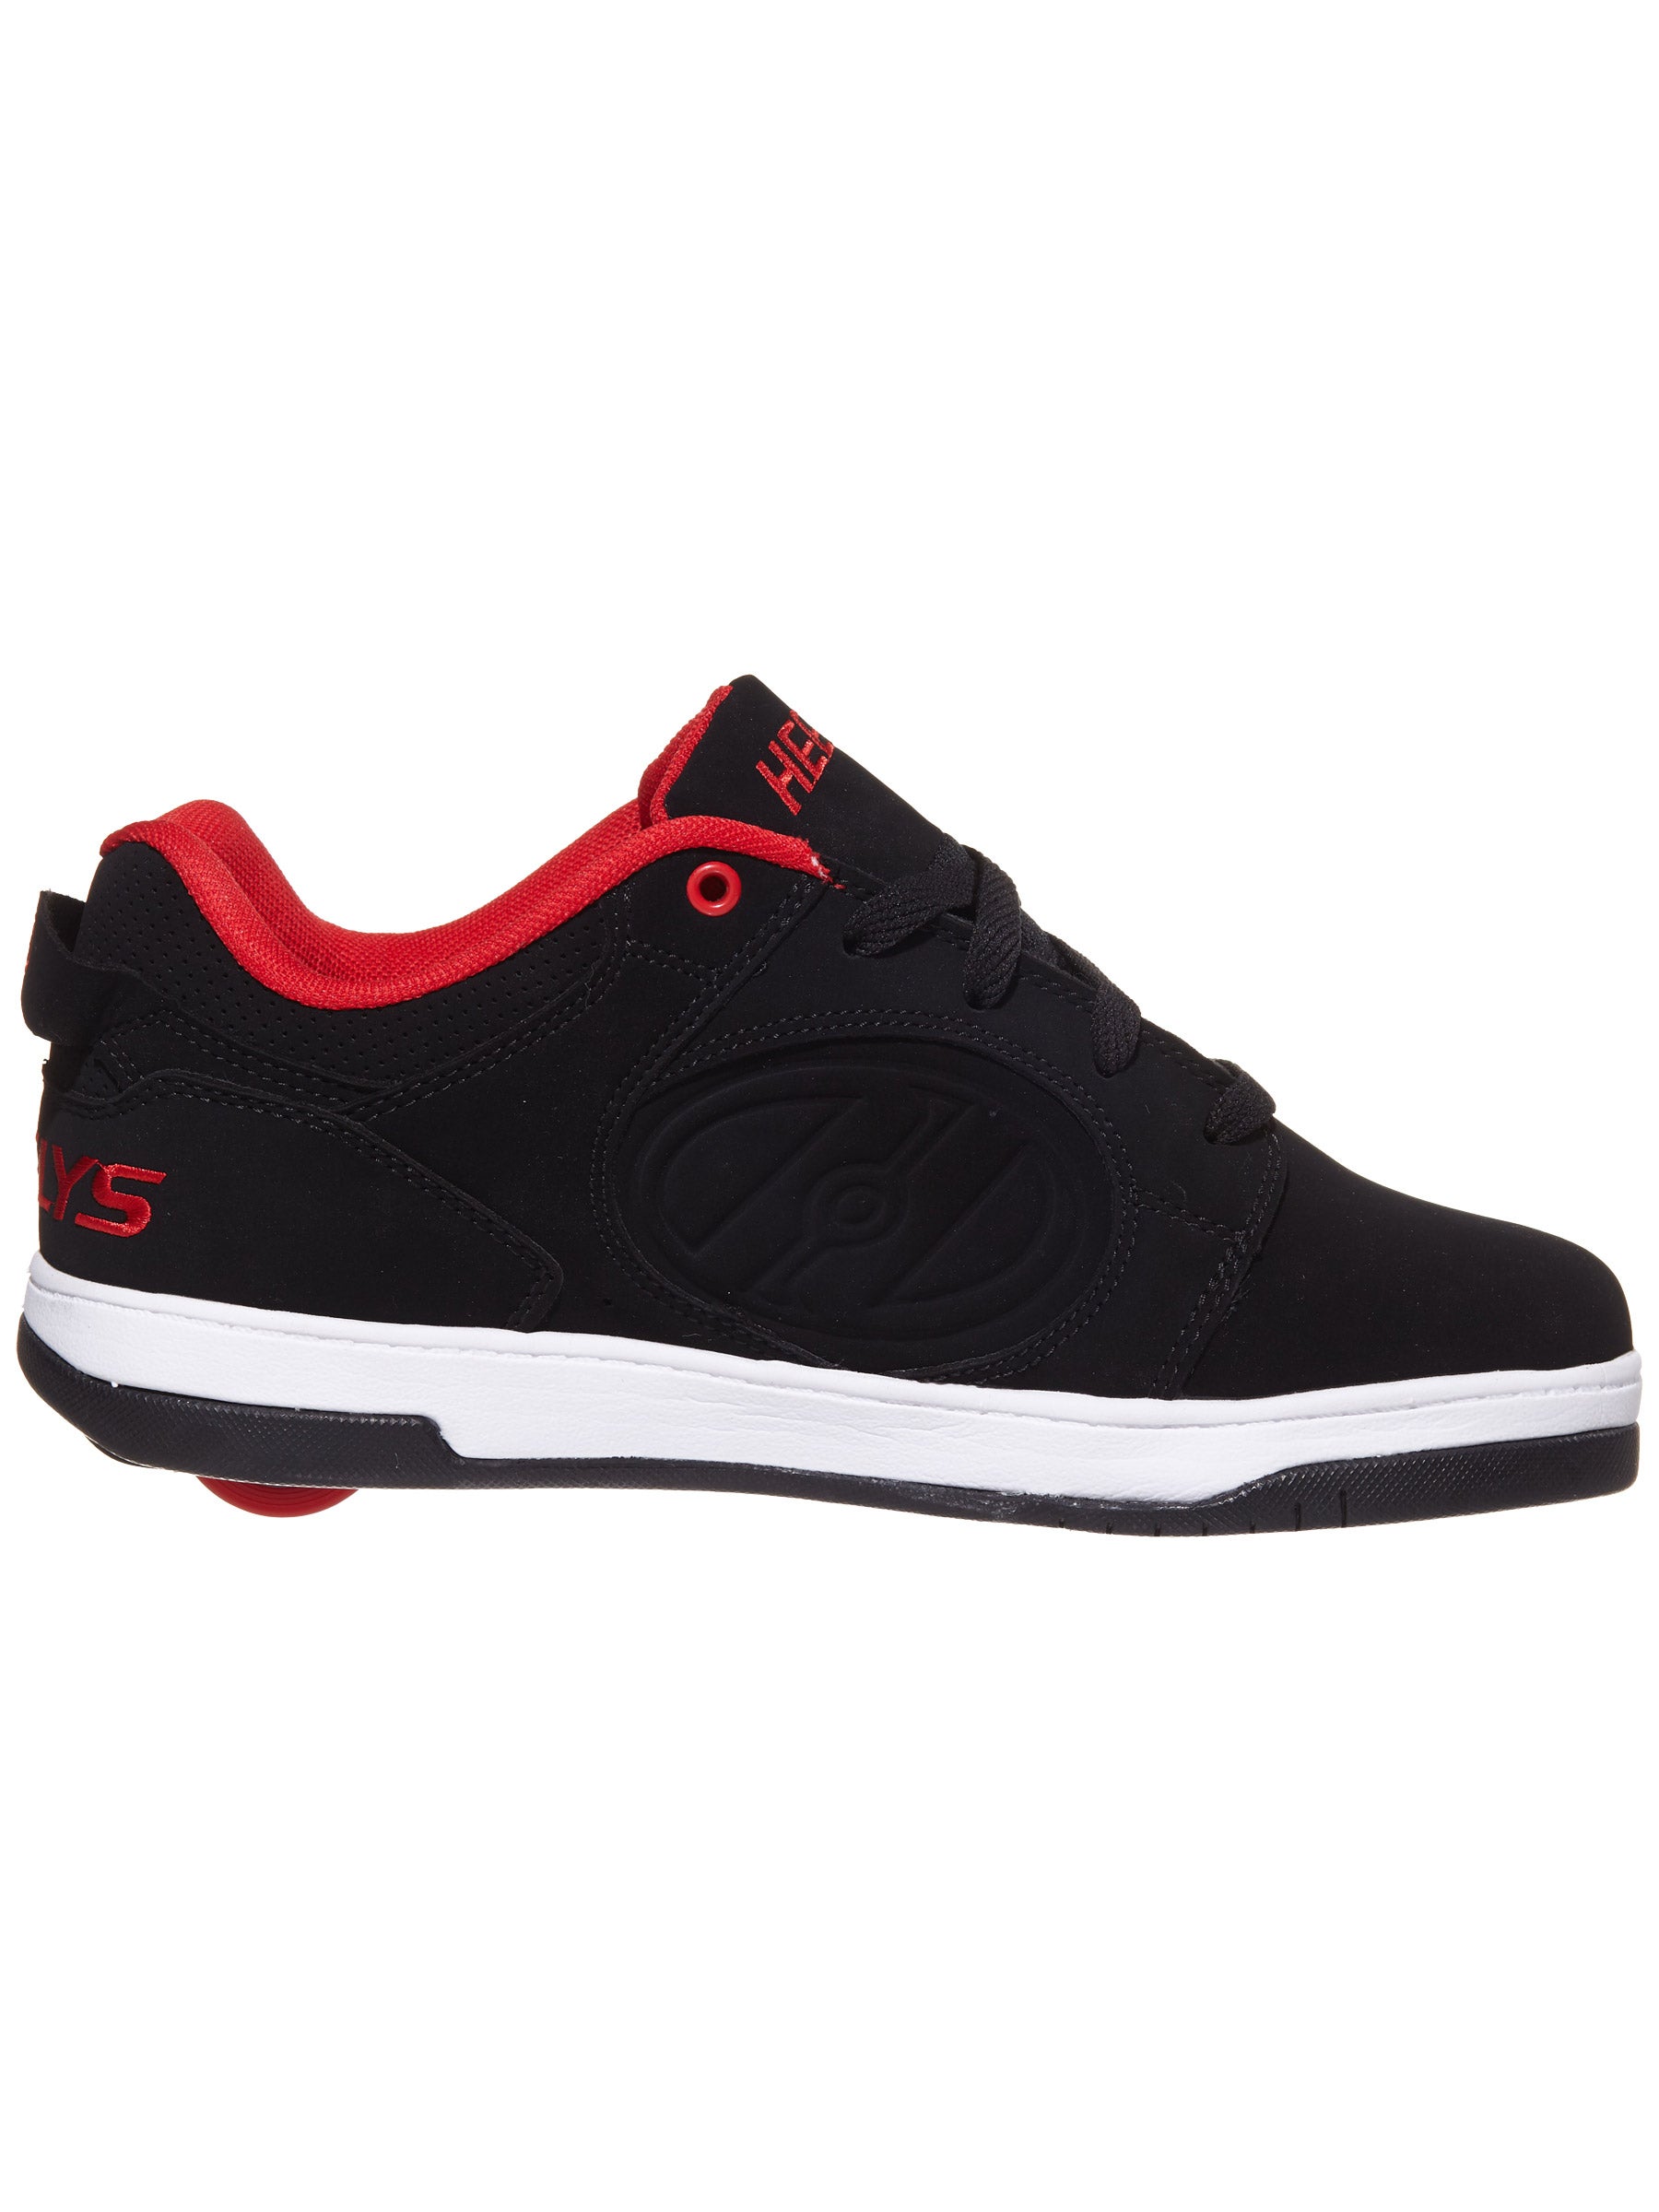 Heelys Heelys Voyager Skate Shoes size kids yth 5 Black Red HE100712 